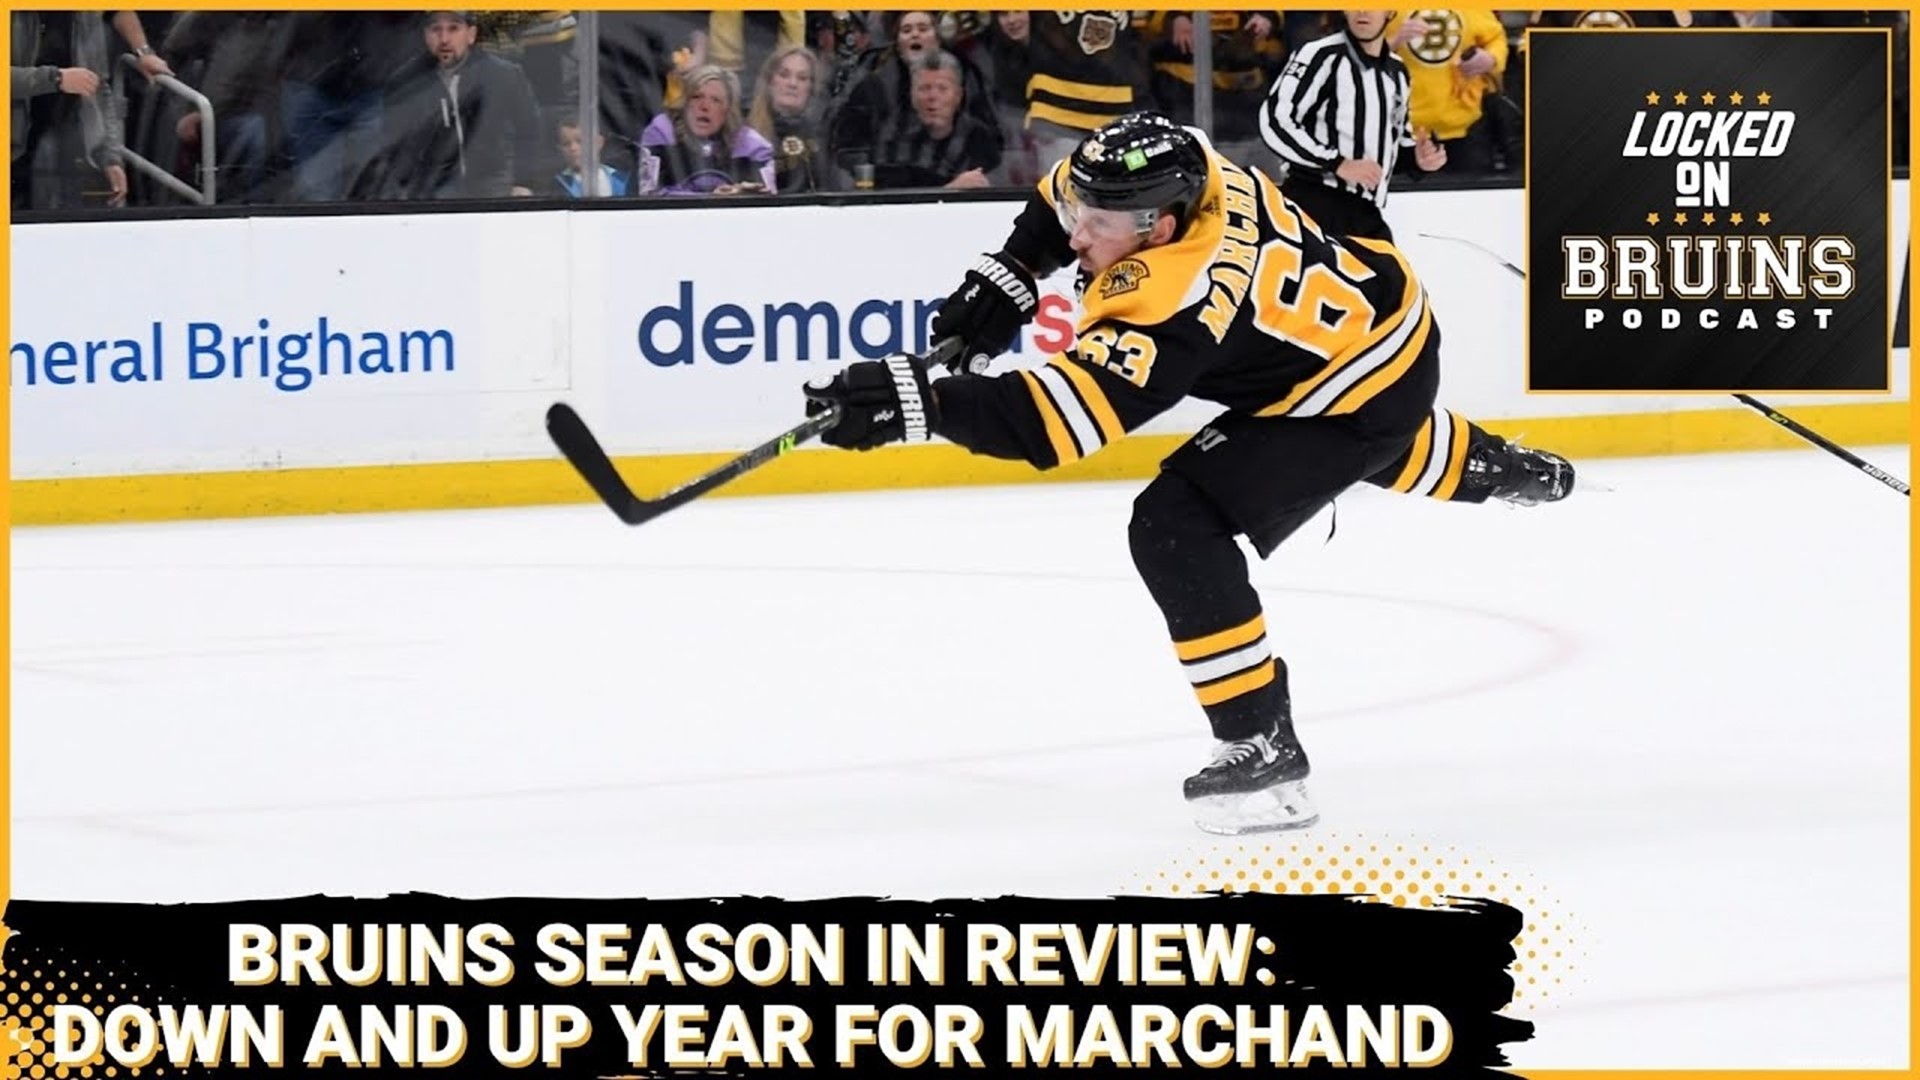 Download Brad Marchand Boston Bruins Wallpaper